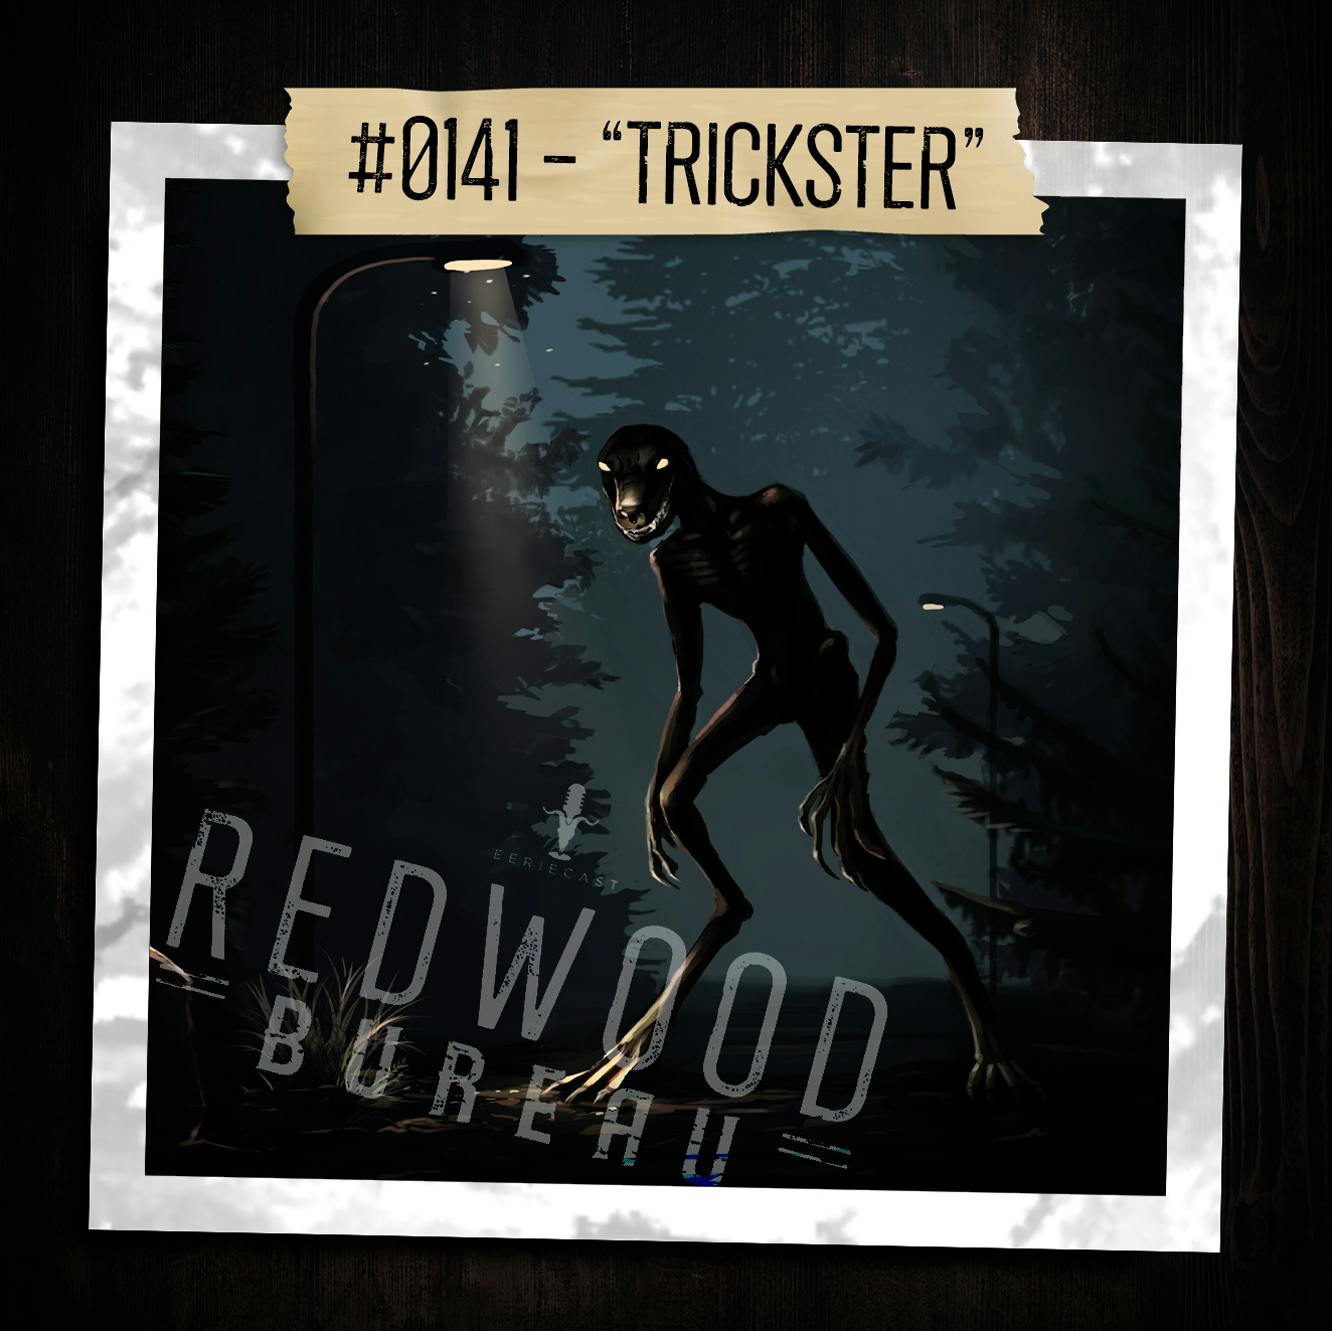 "TRICKSTER" - Redwood Bureau Phenomenon #0141